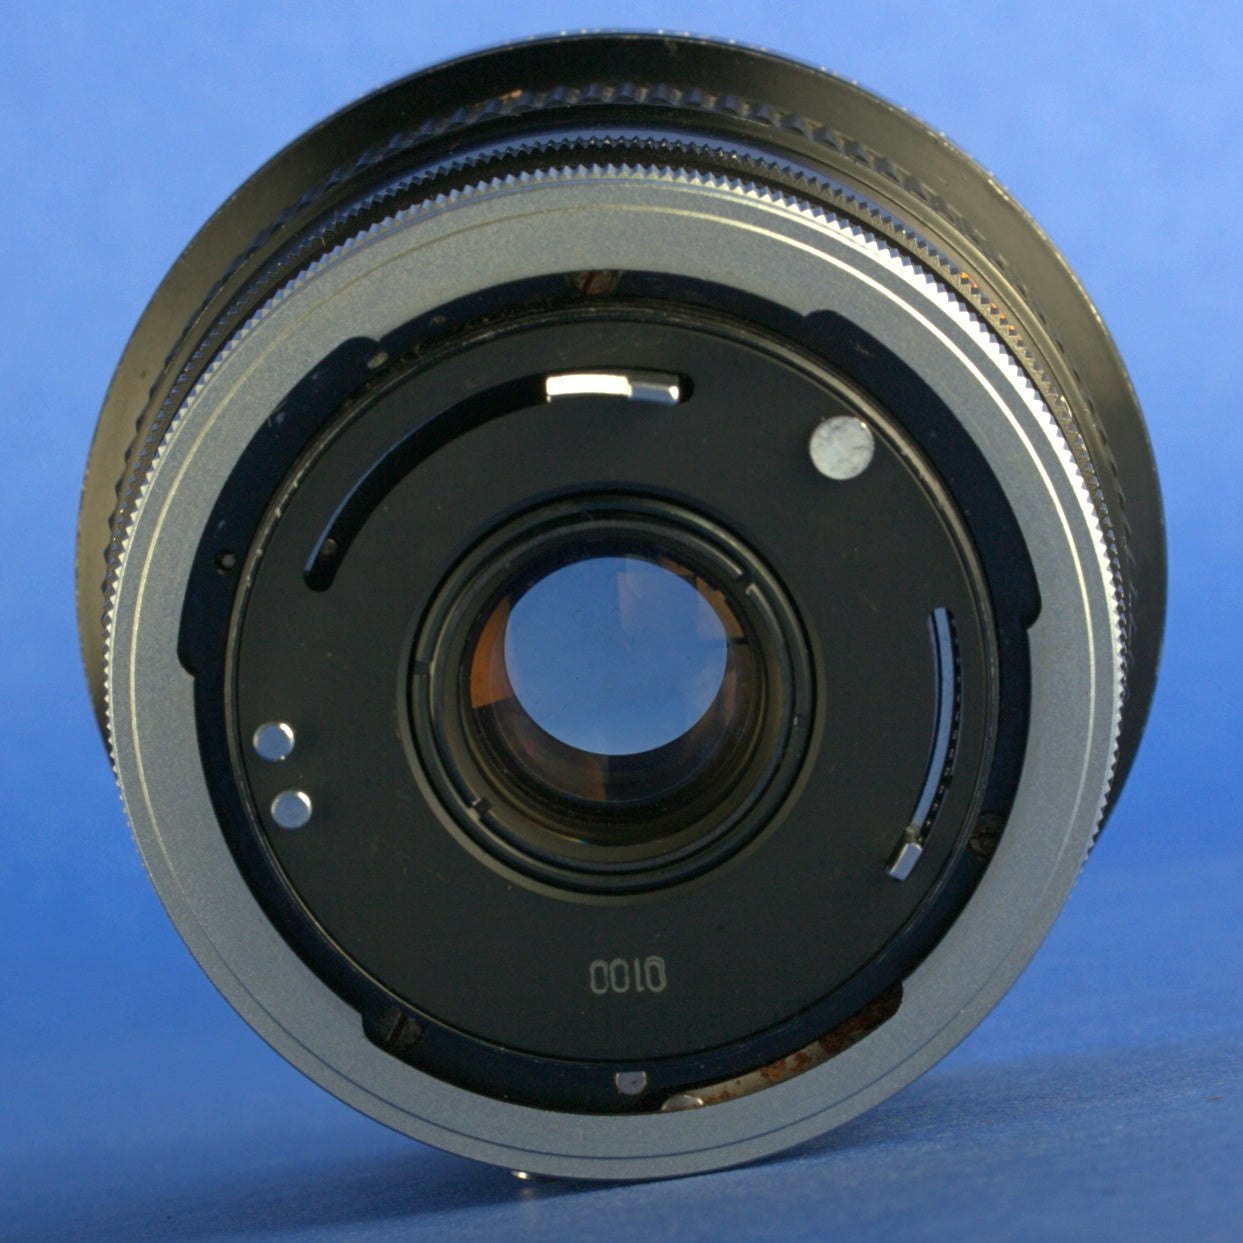 Canon FD 17mm F4 S.S.C. Lens